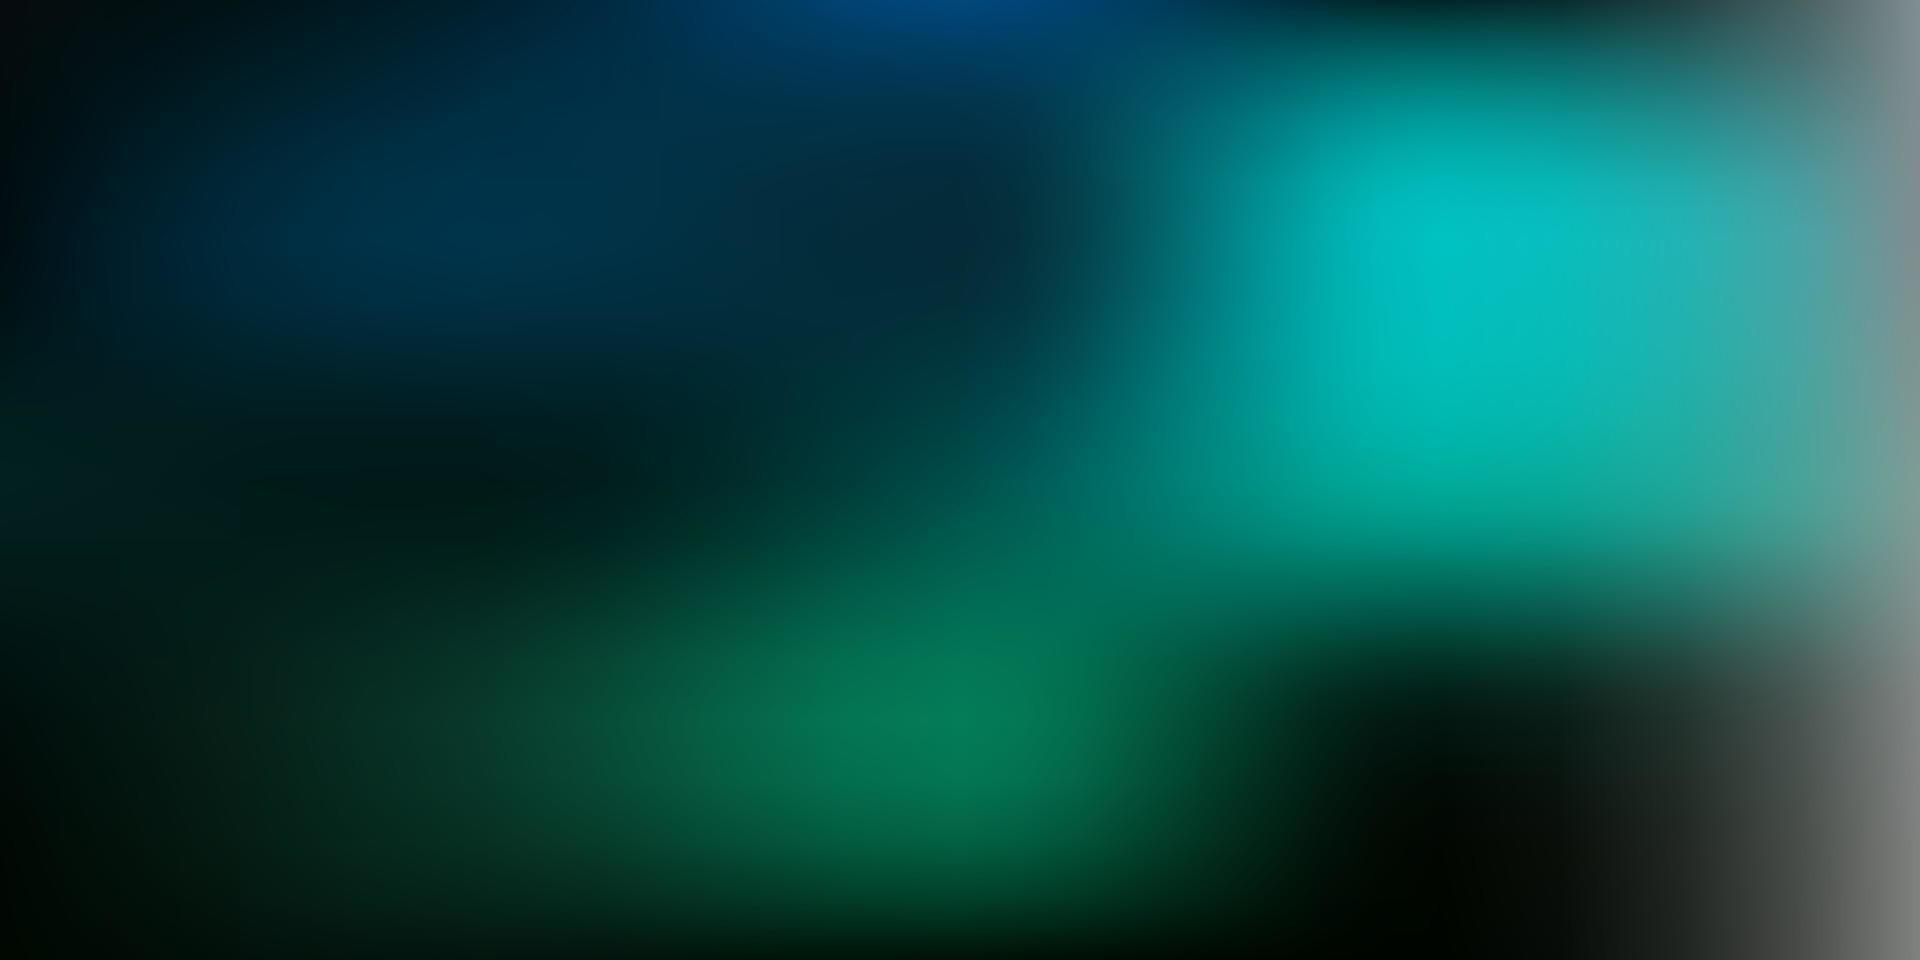 donkerblauwe, groene vector gradiënt vervagen achtergrond.